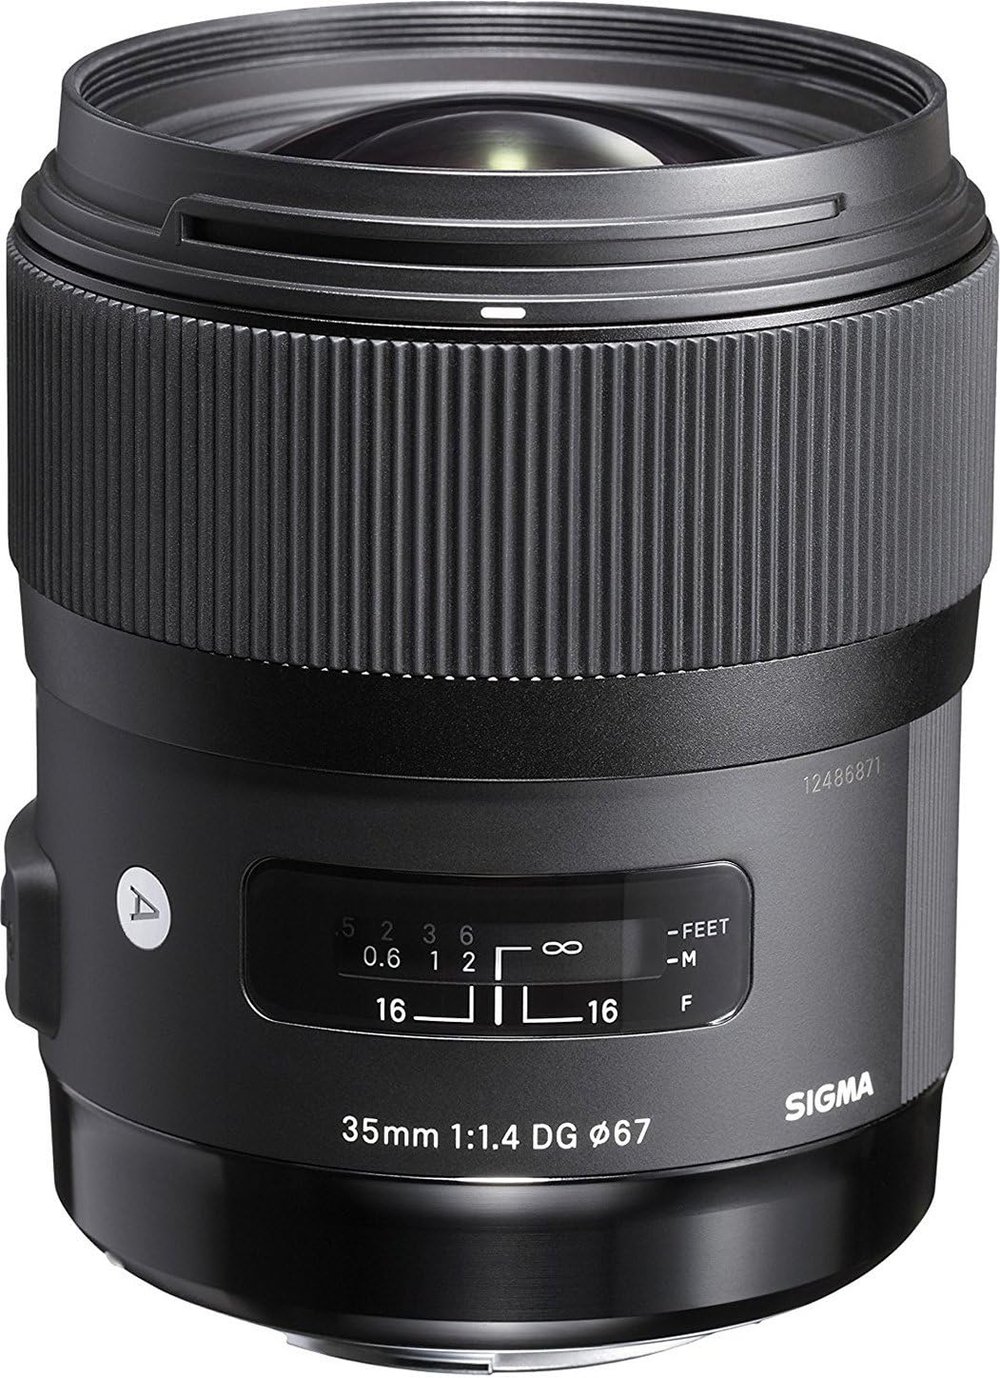 Sigma 35mm Art lens